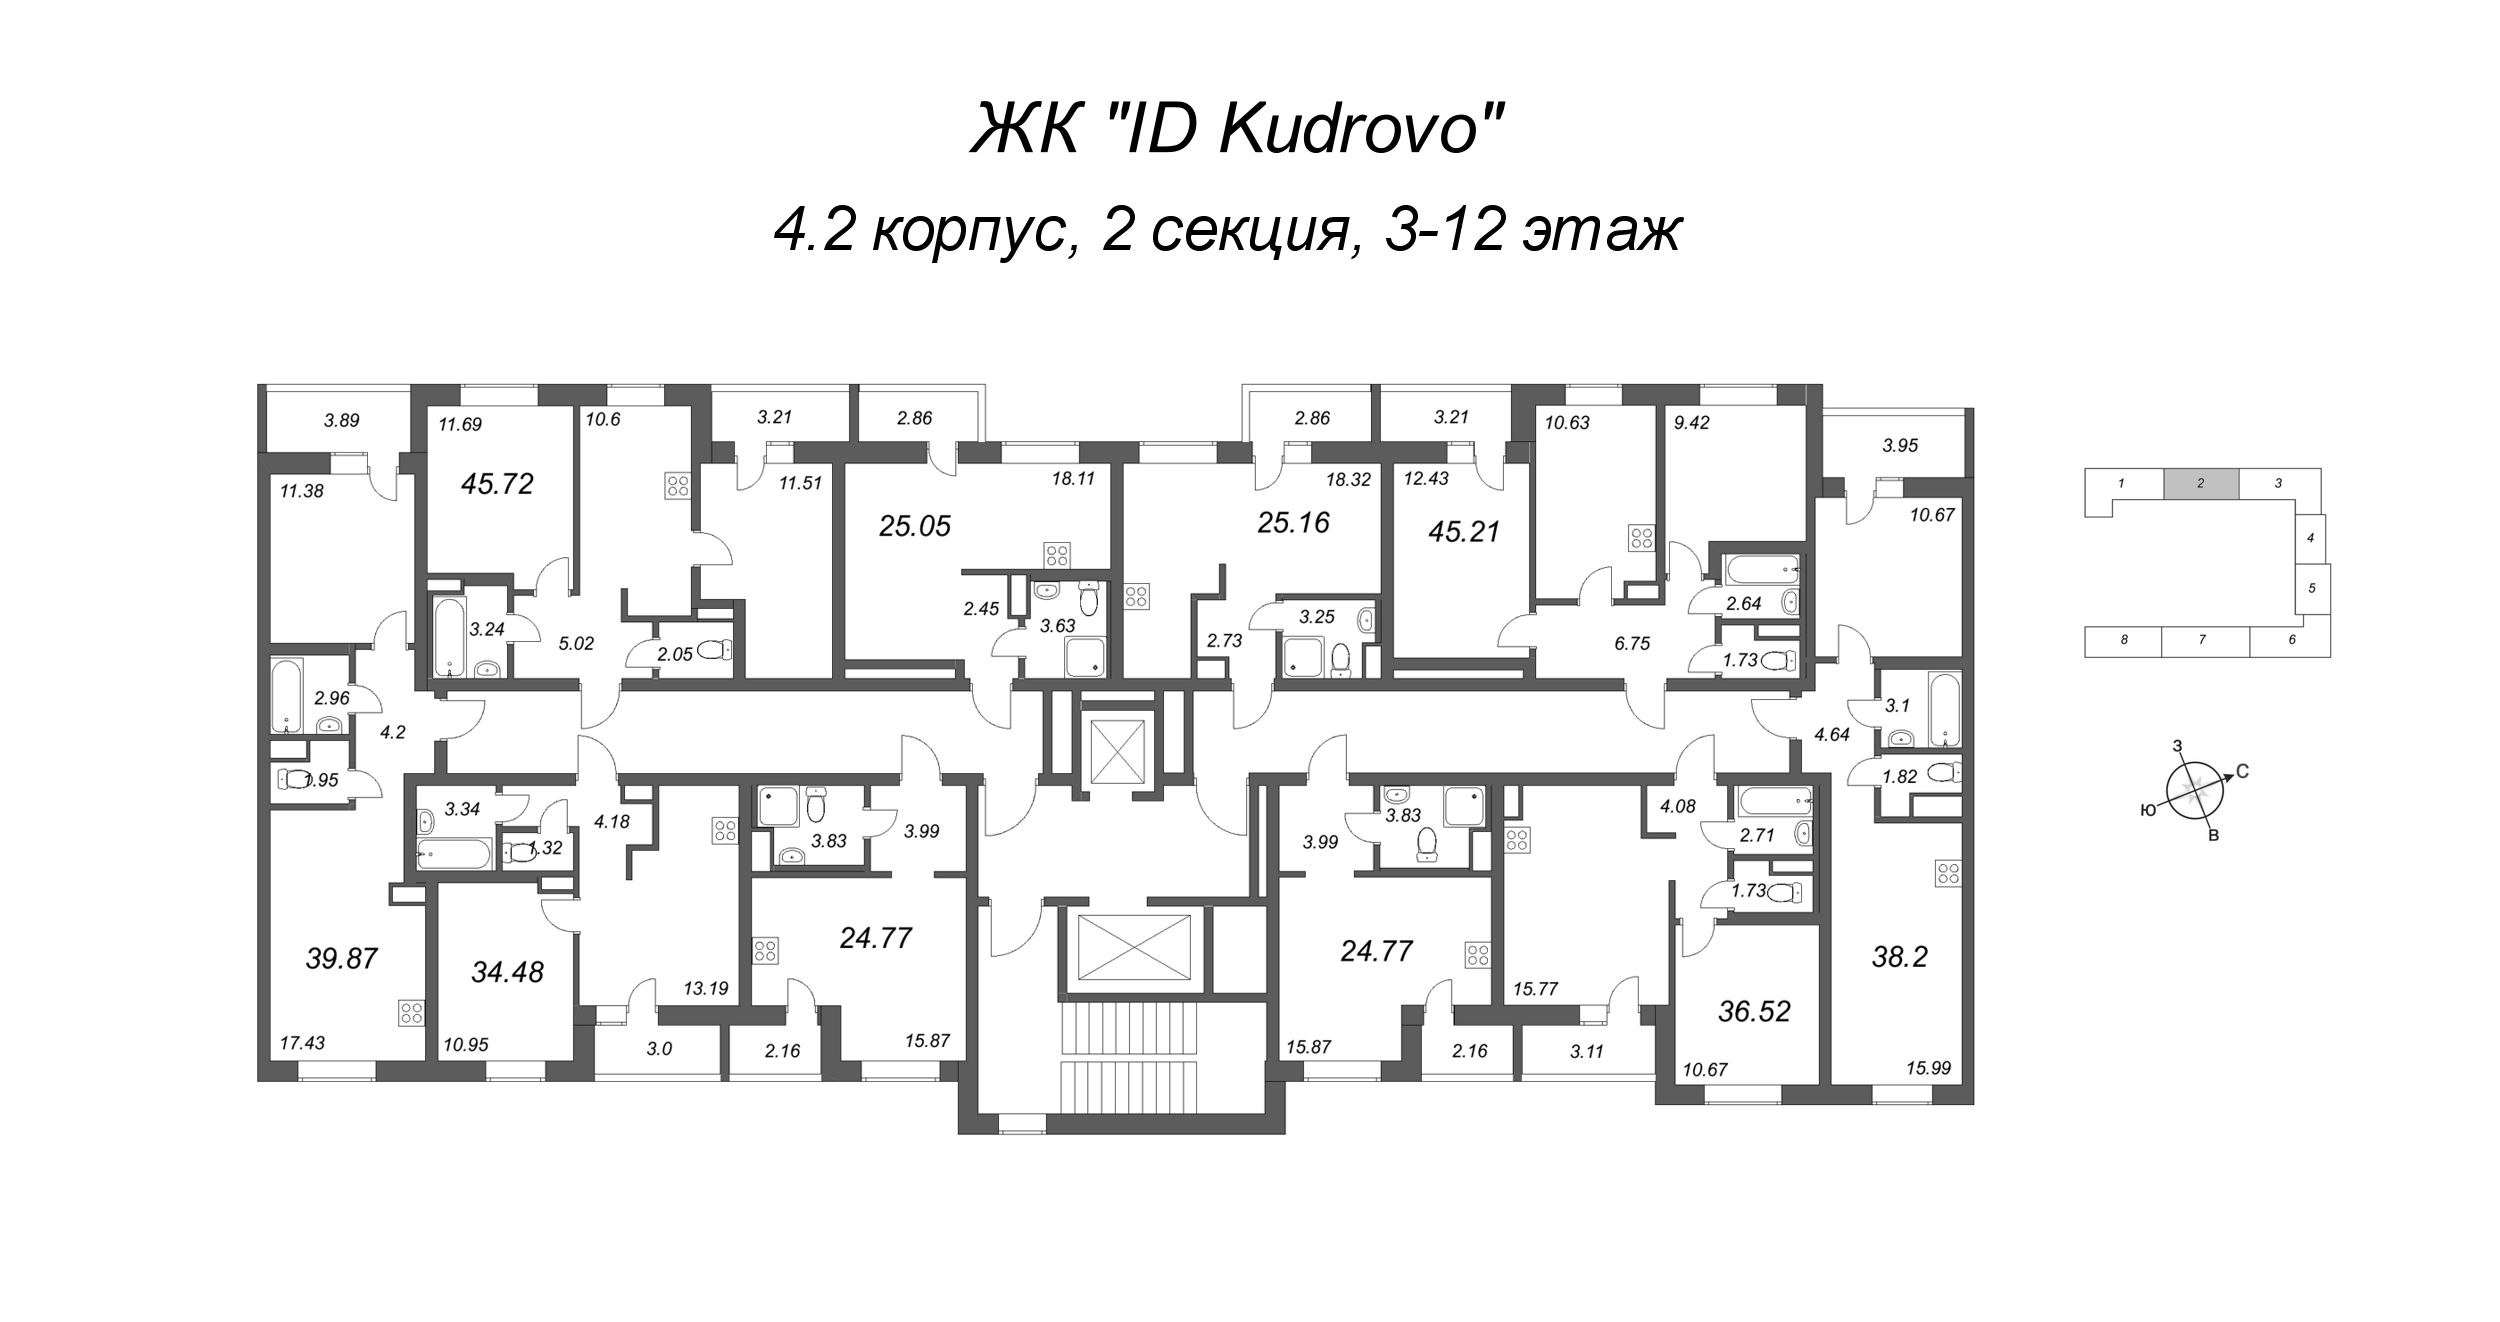 2-комнатная (Евро) квартира, 39.87 м² - планировка этажа